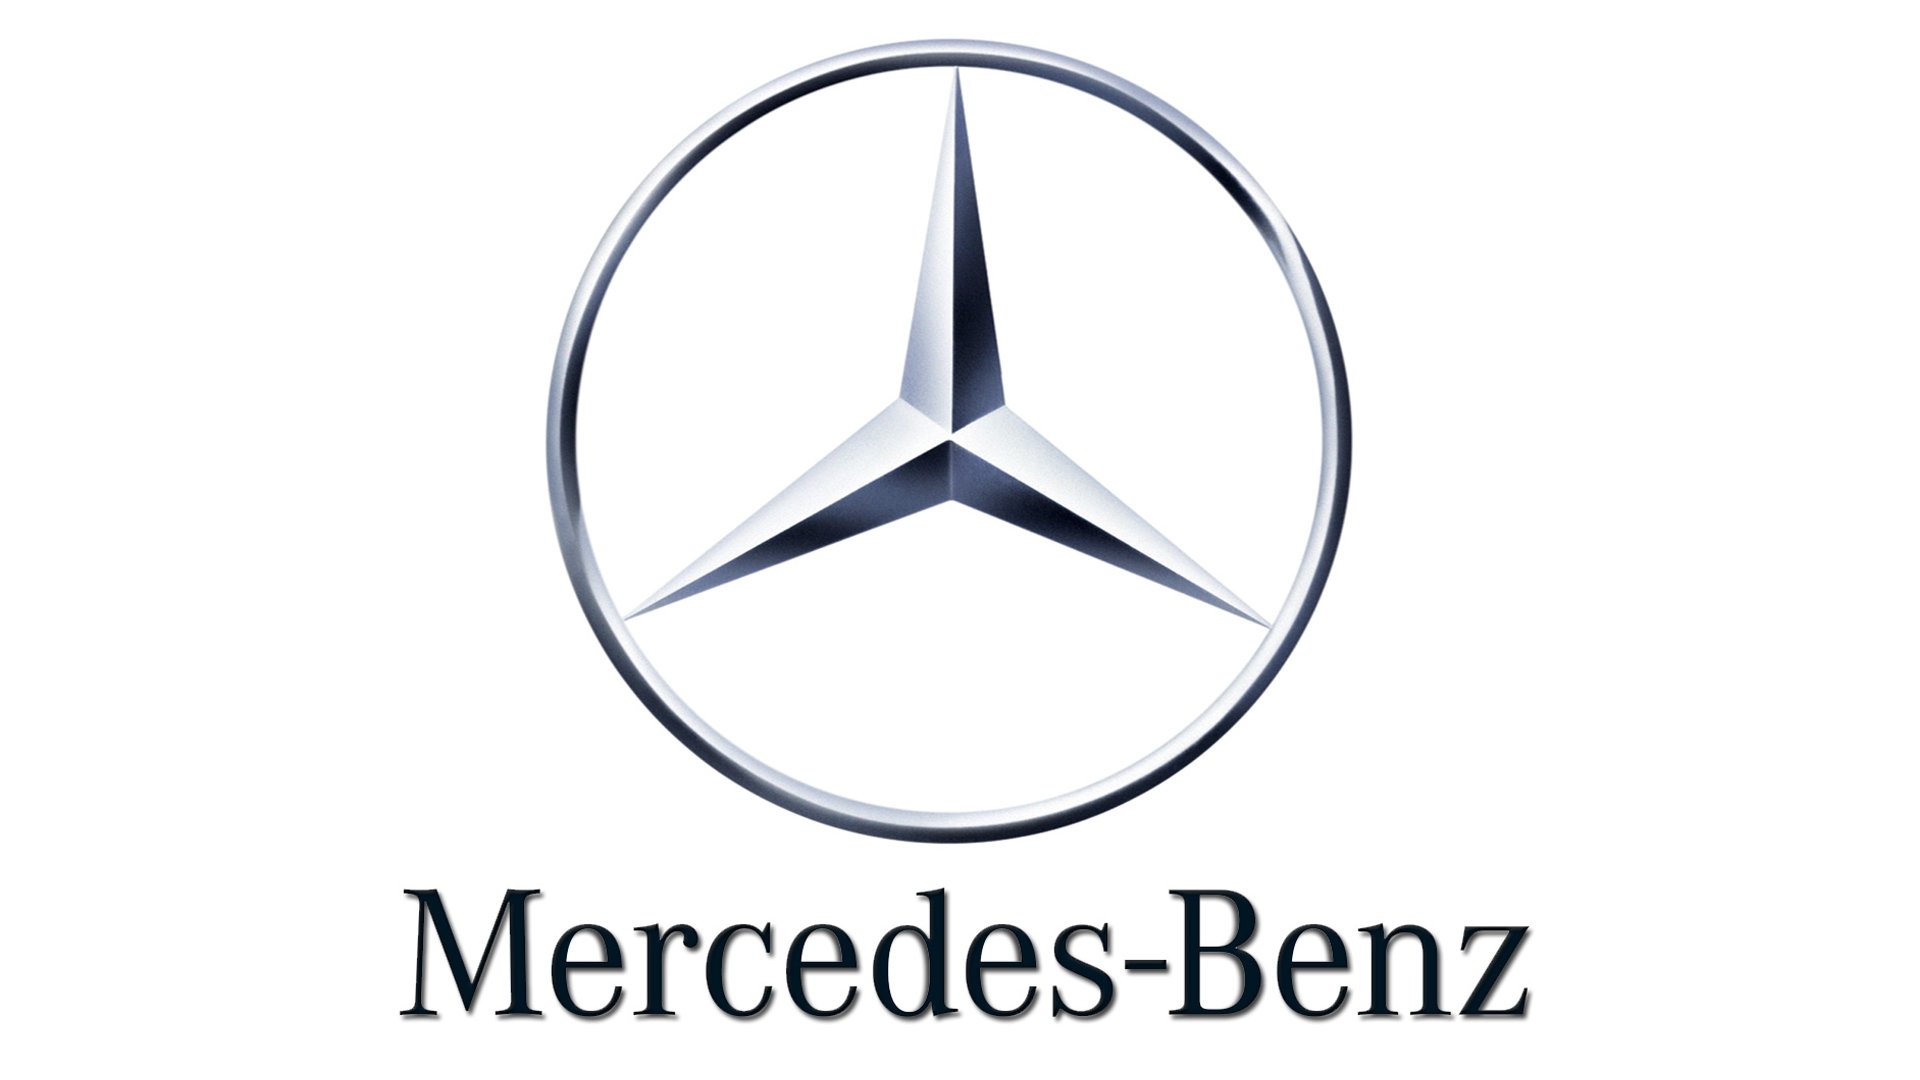 MercedesBenz share buyback programme  MercedesBenz Group  Investors   Share  Share buyback